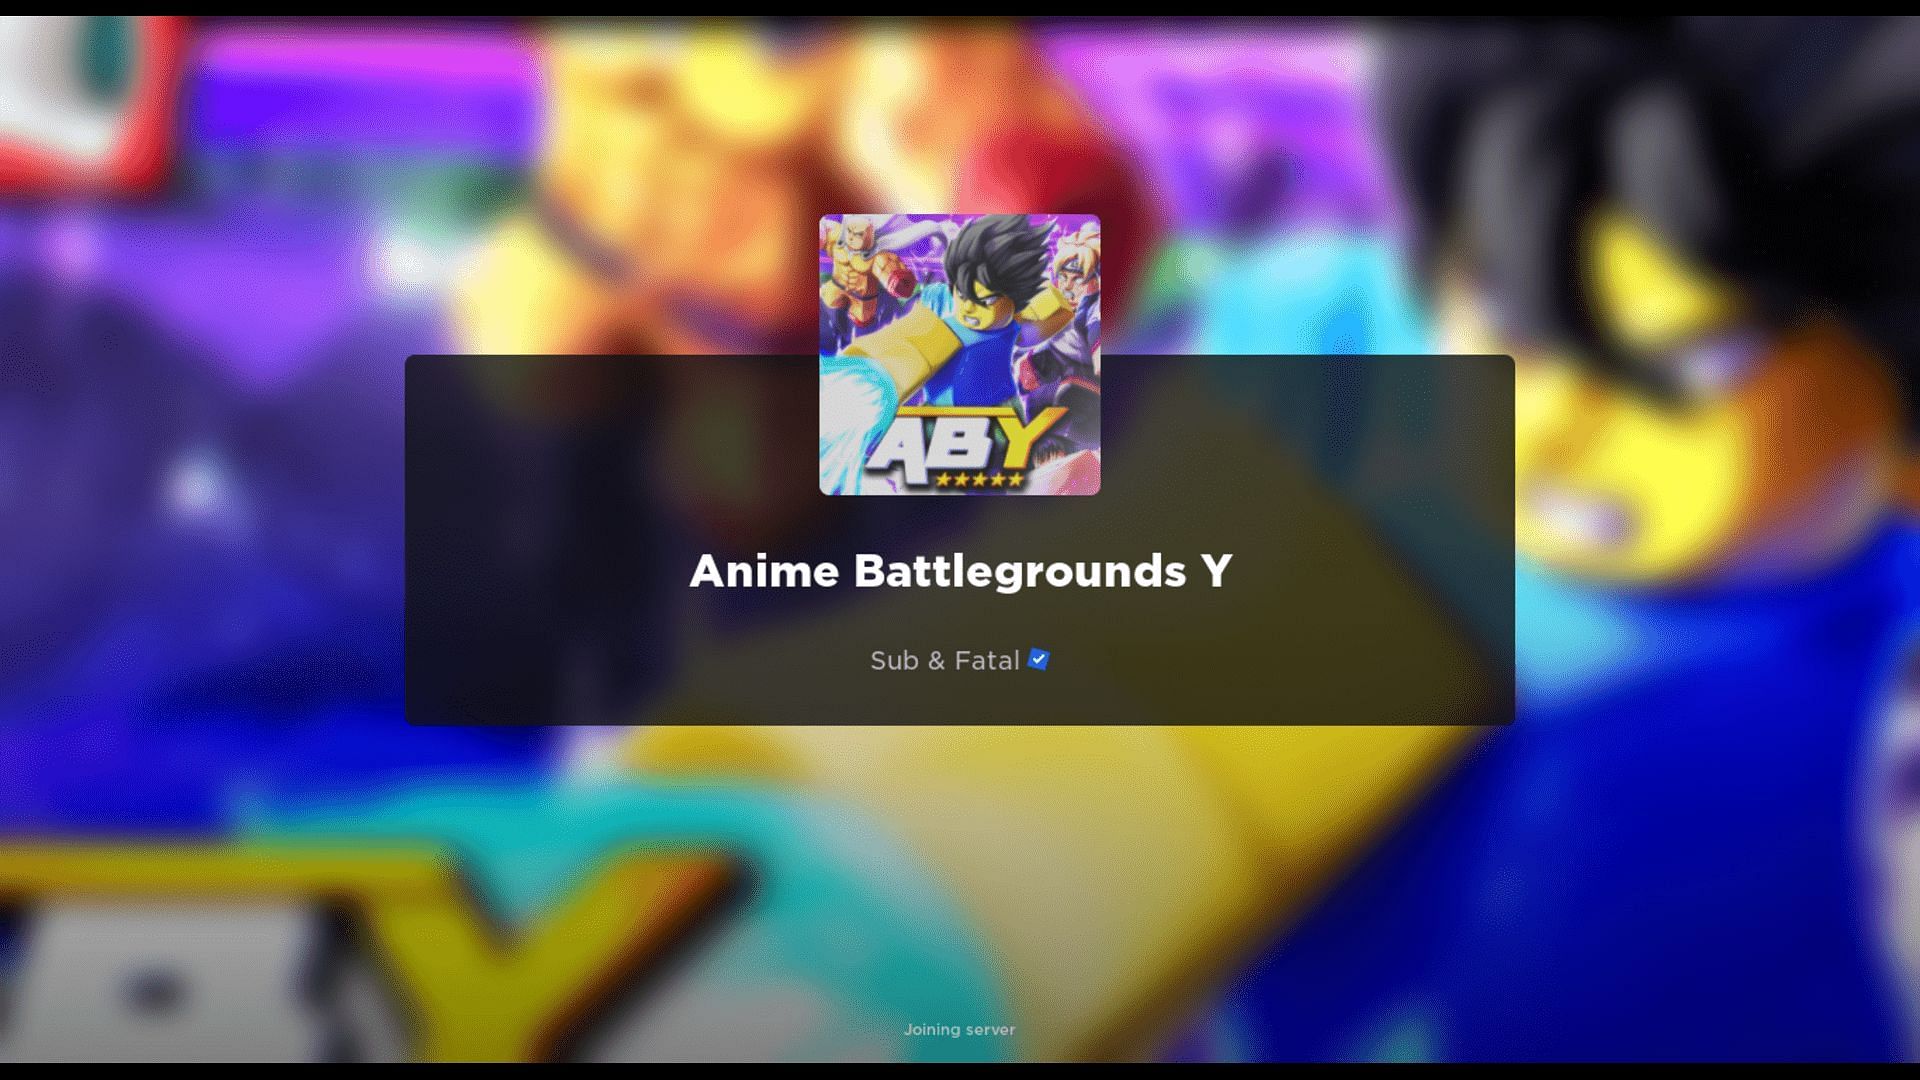 Anime Battlegrounds Y codes